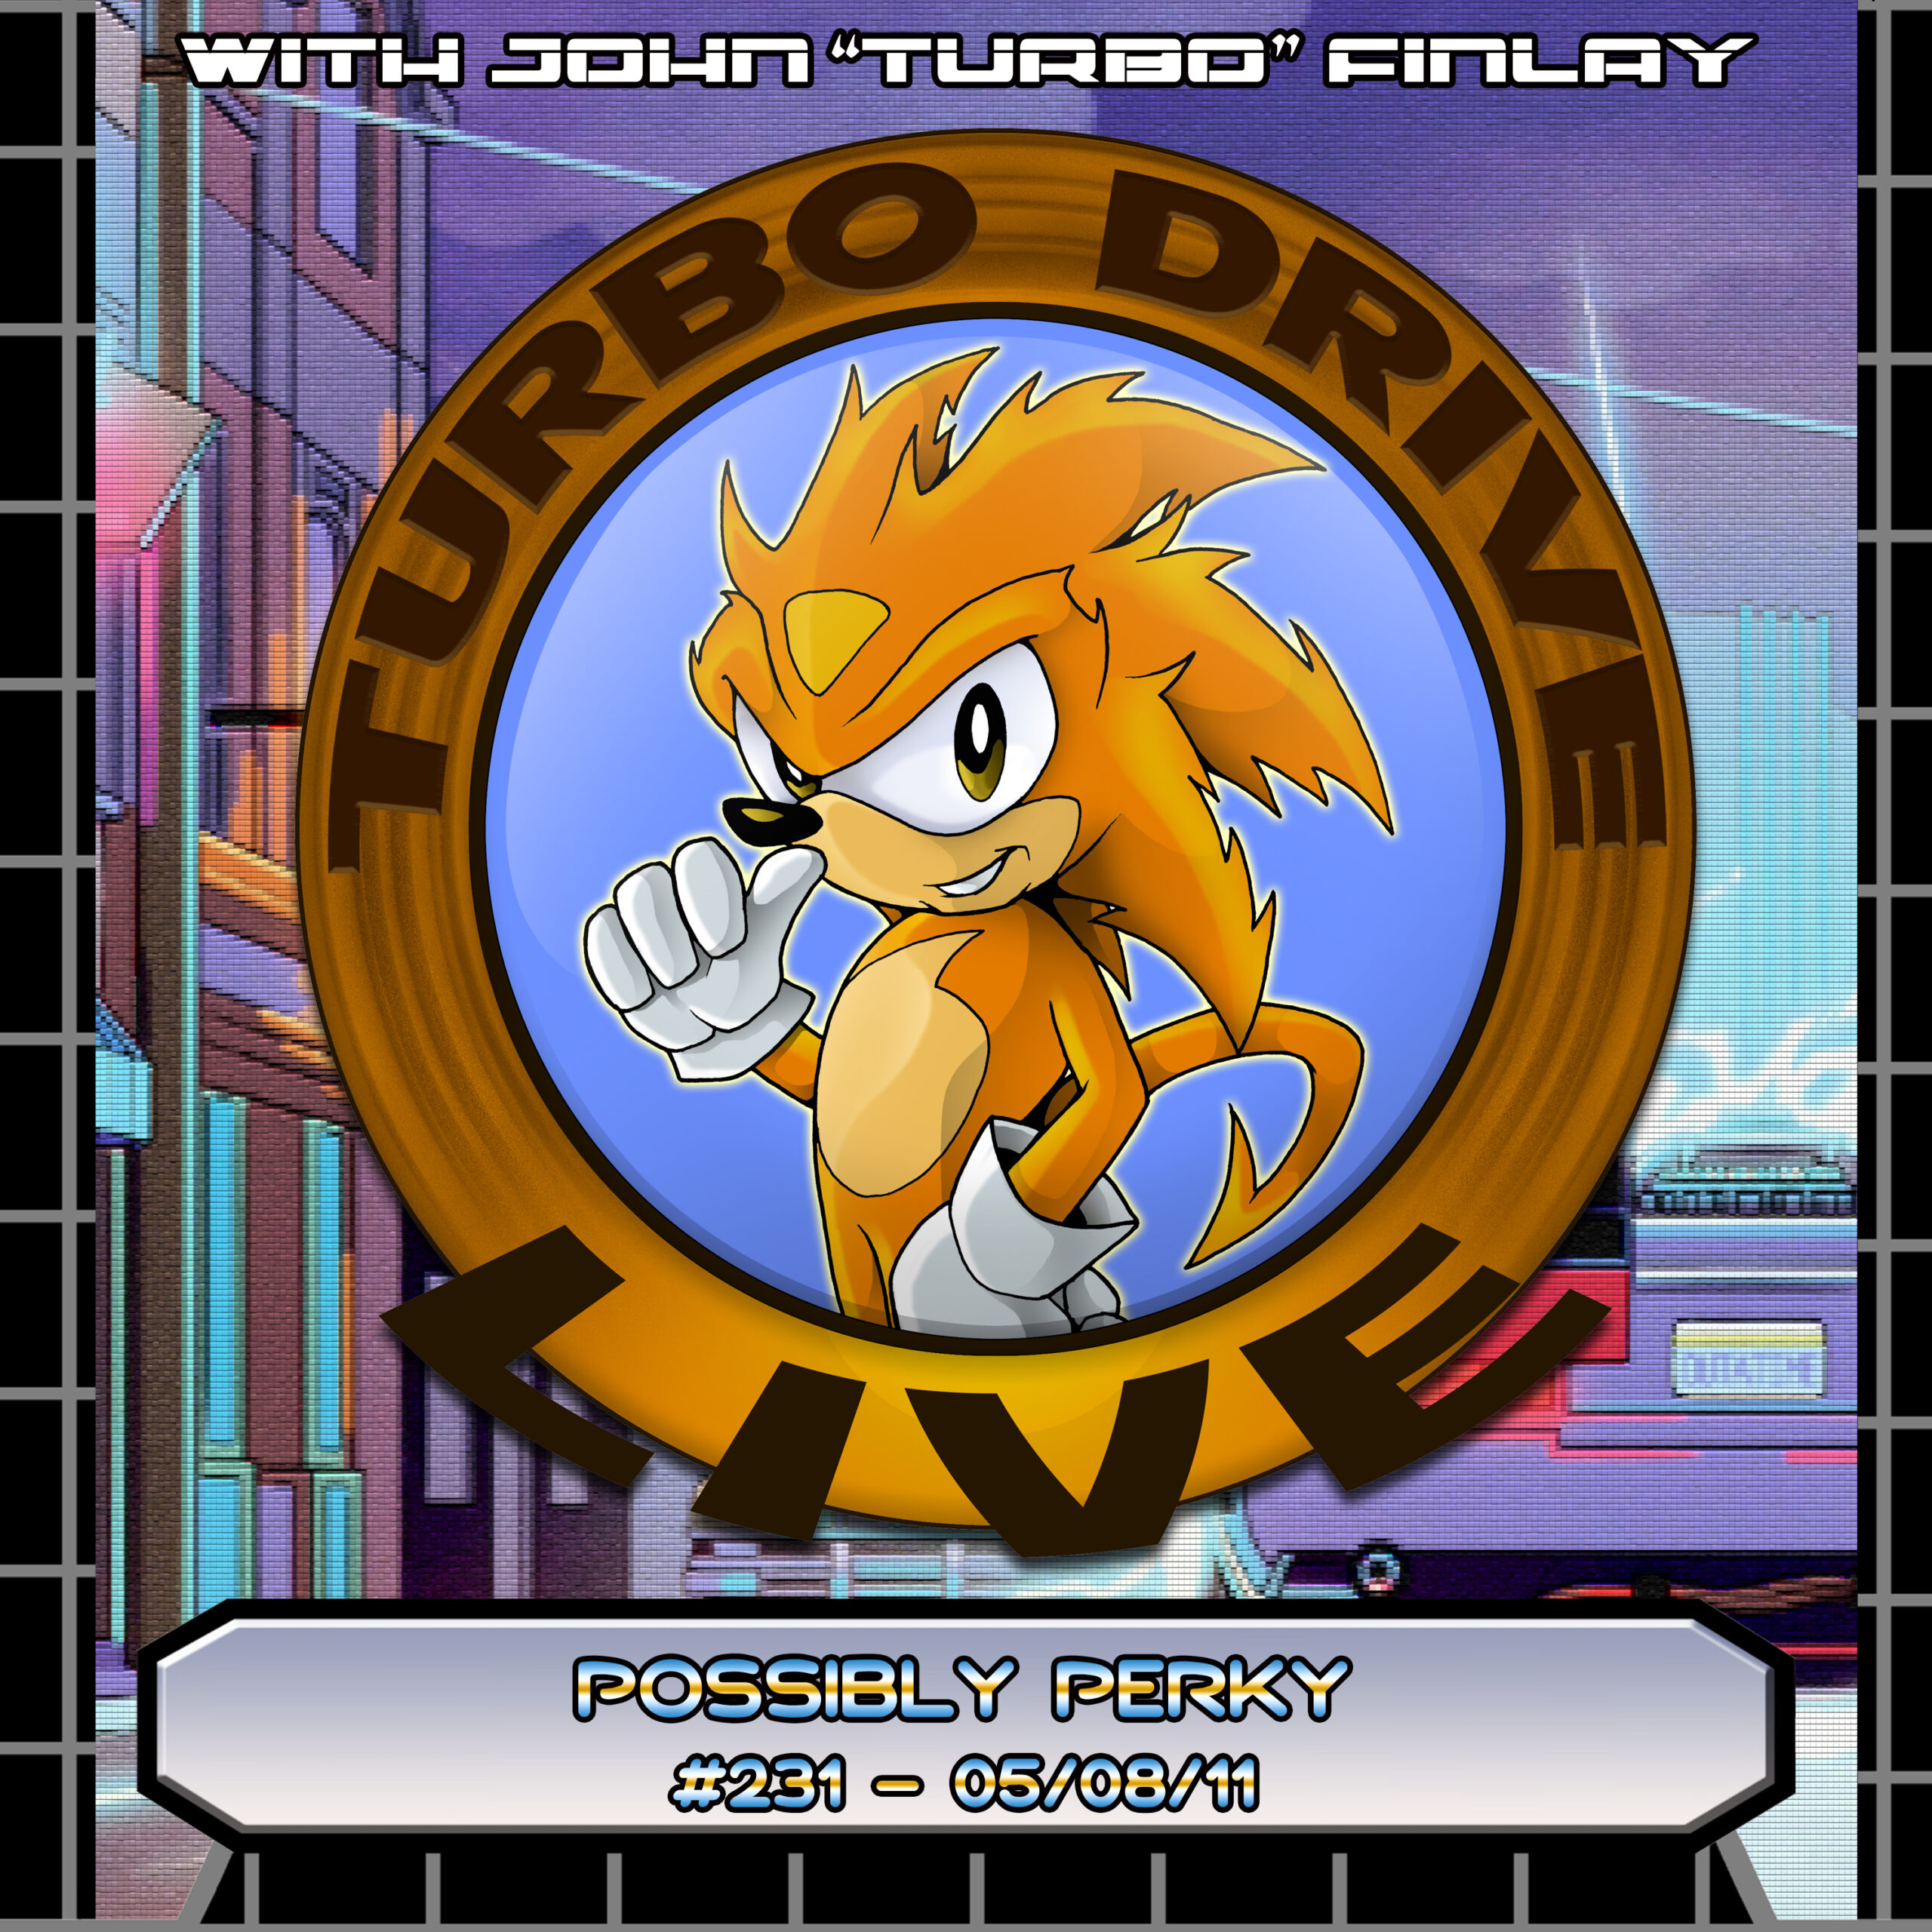 Game Gear Longplay [037] Sonic The Hedgehog 2 